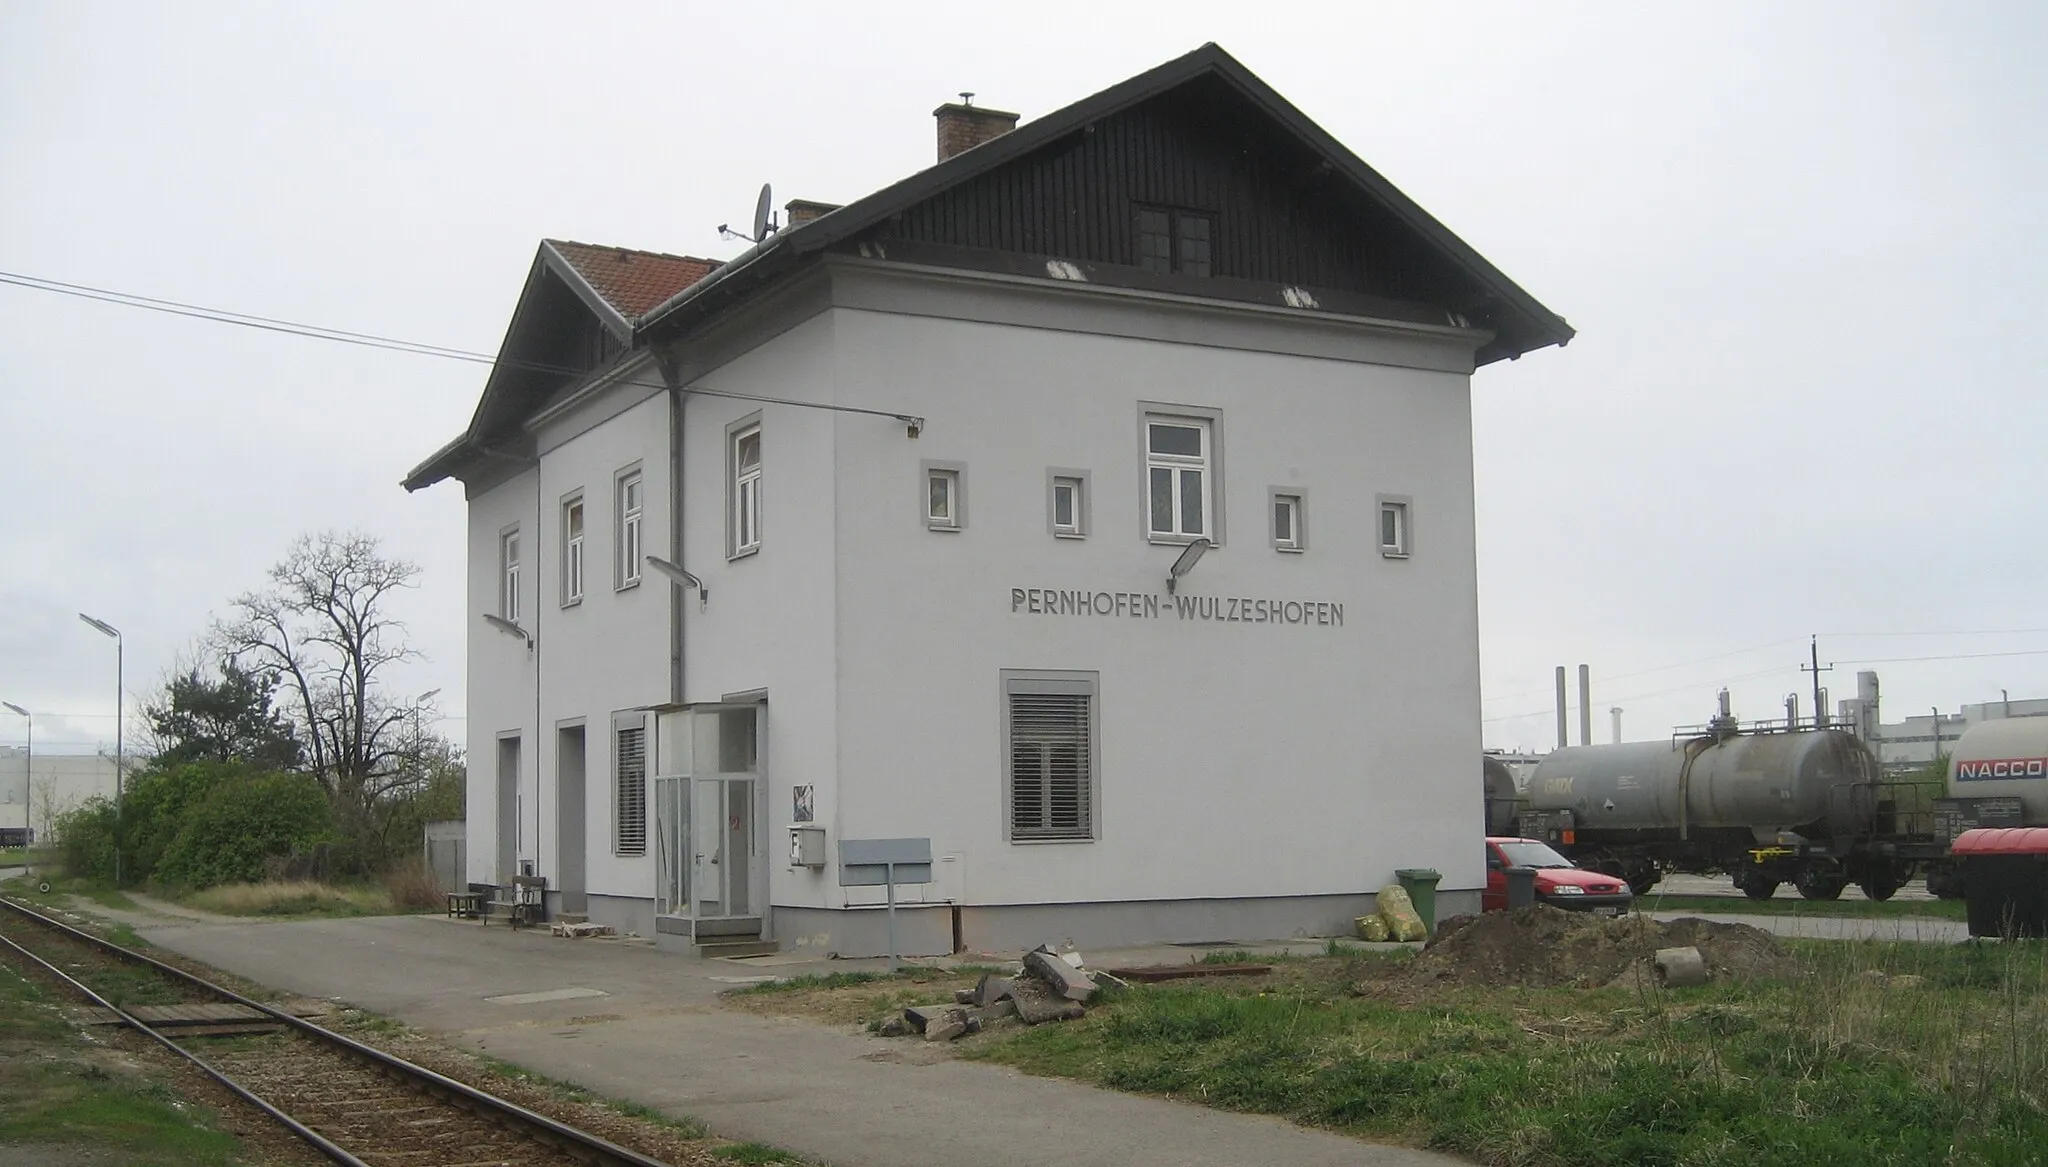 Photo showing: Pernhofen-Wulzeshofen train station in Lower Austria